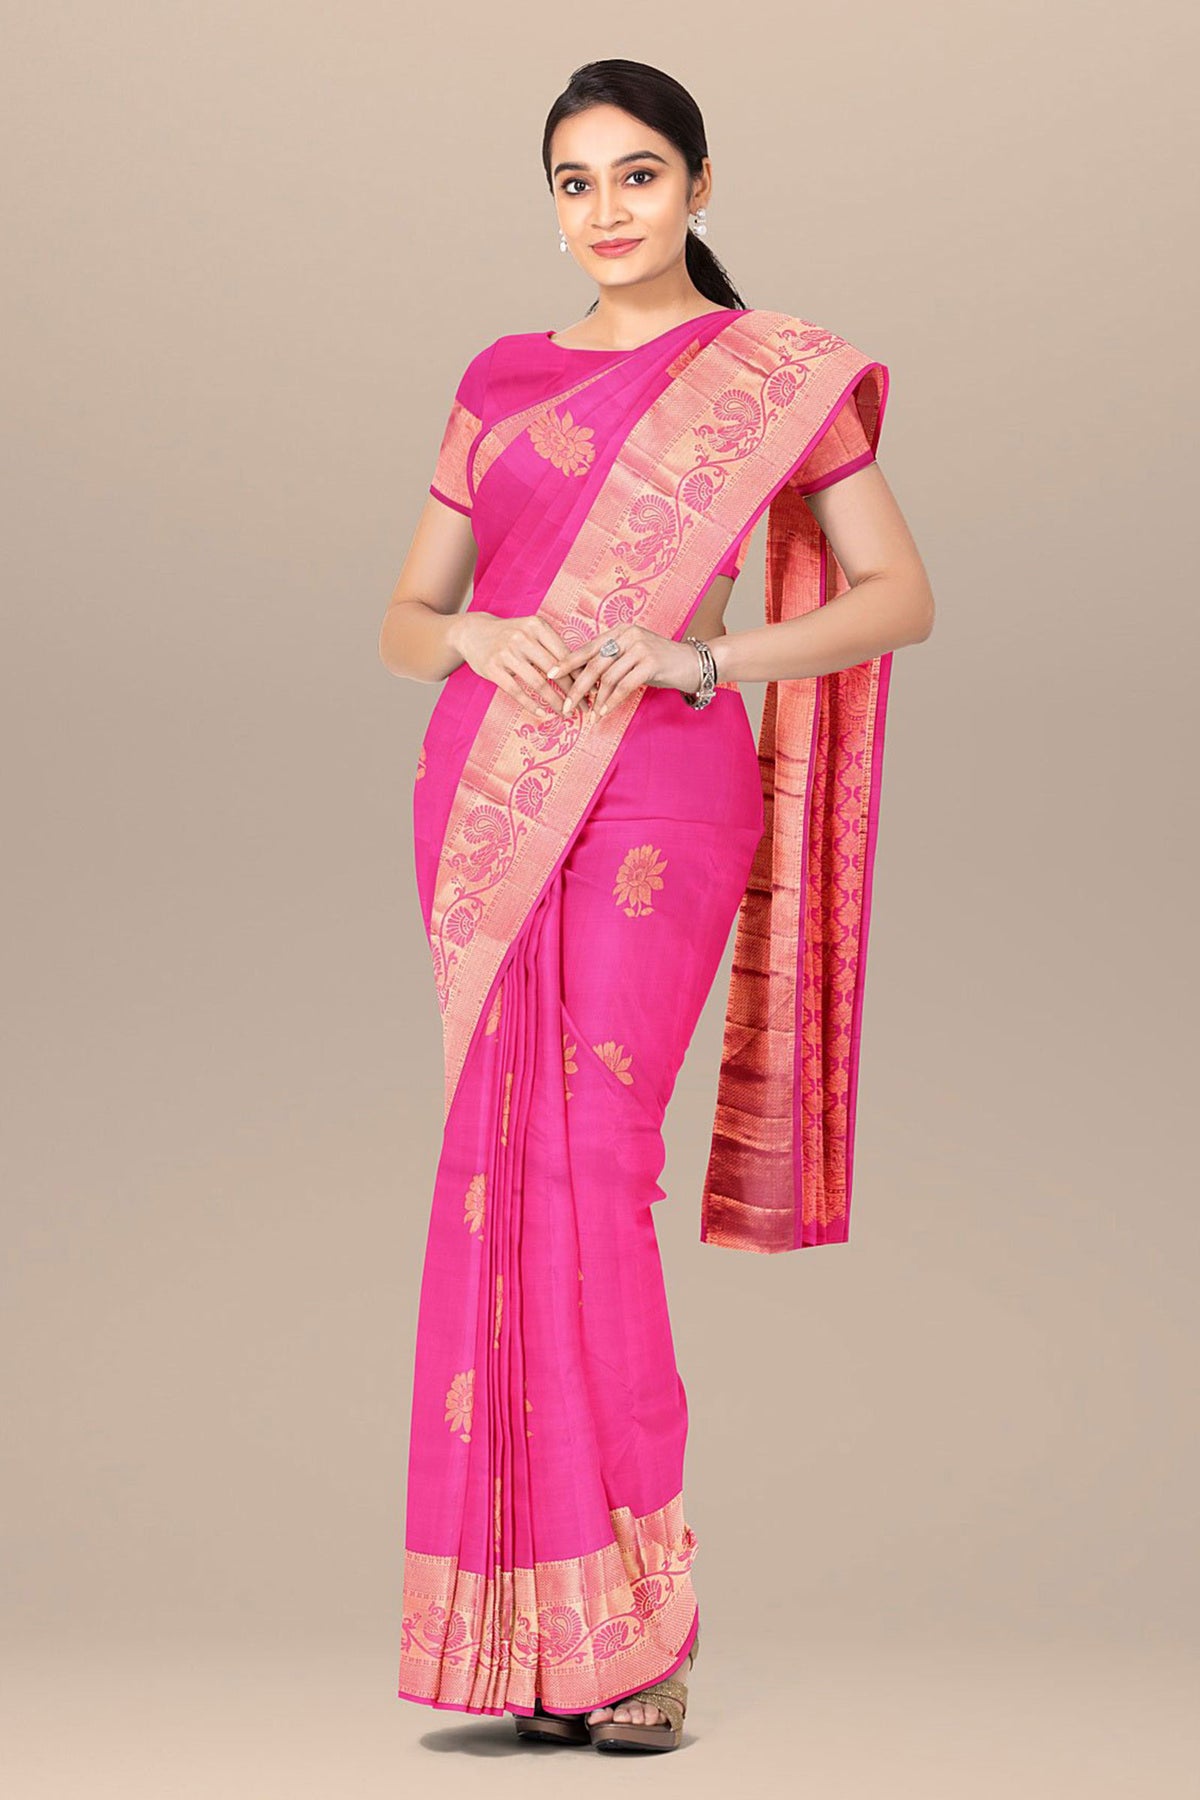 Copper Zari Border With Flower Motif Magenta Pink Kanchipuram Silk Saree